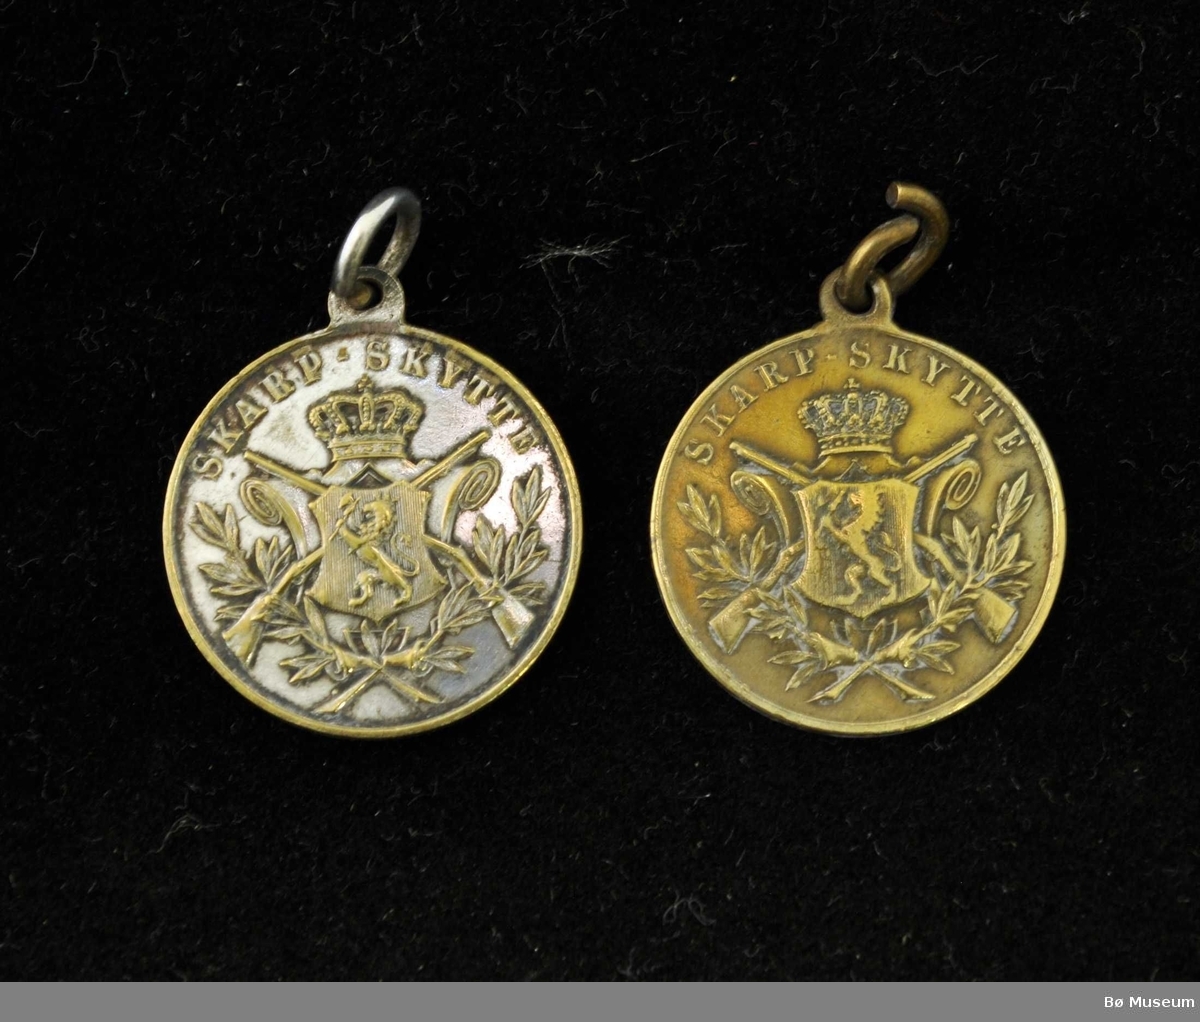 Sirkelformet medalje med løve, krone, korslagte gevær og grener på den ene siden, på den andre siden enkel kantbord. Samt 5 medaljenåler.